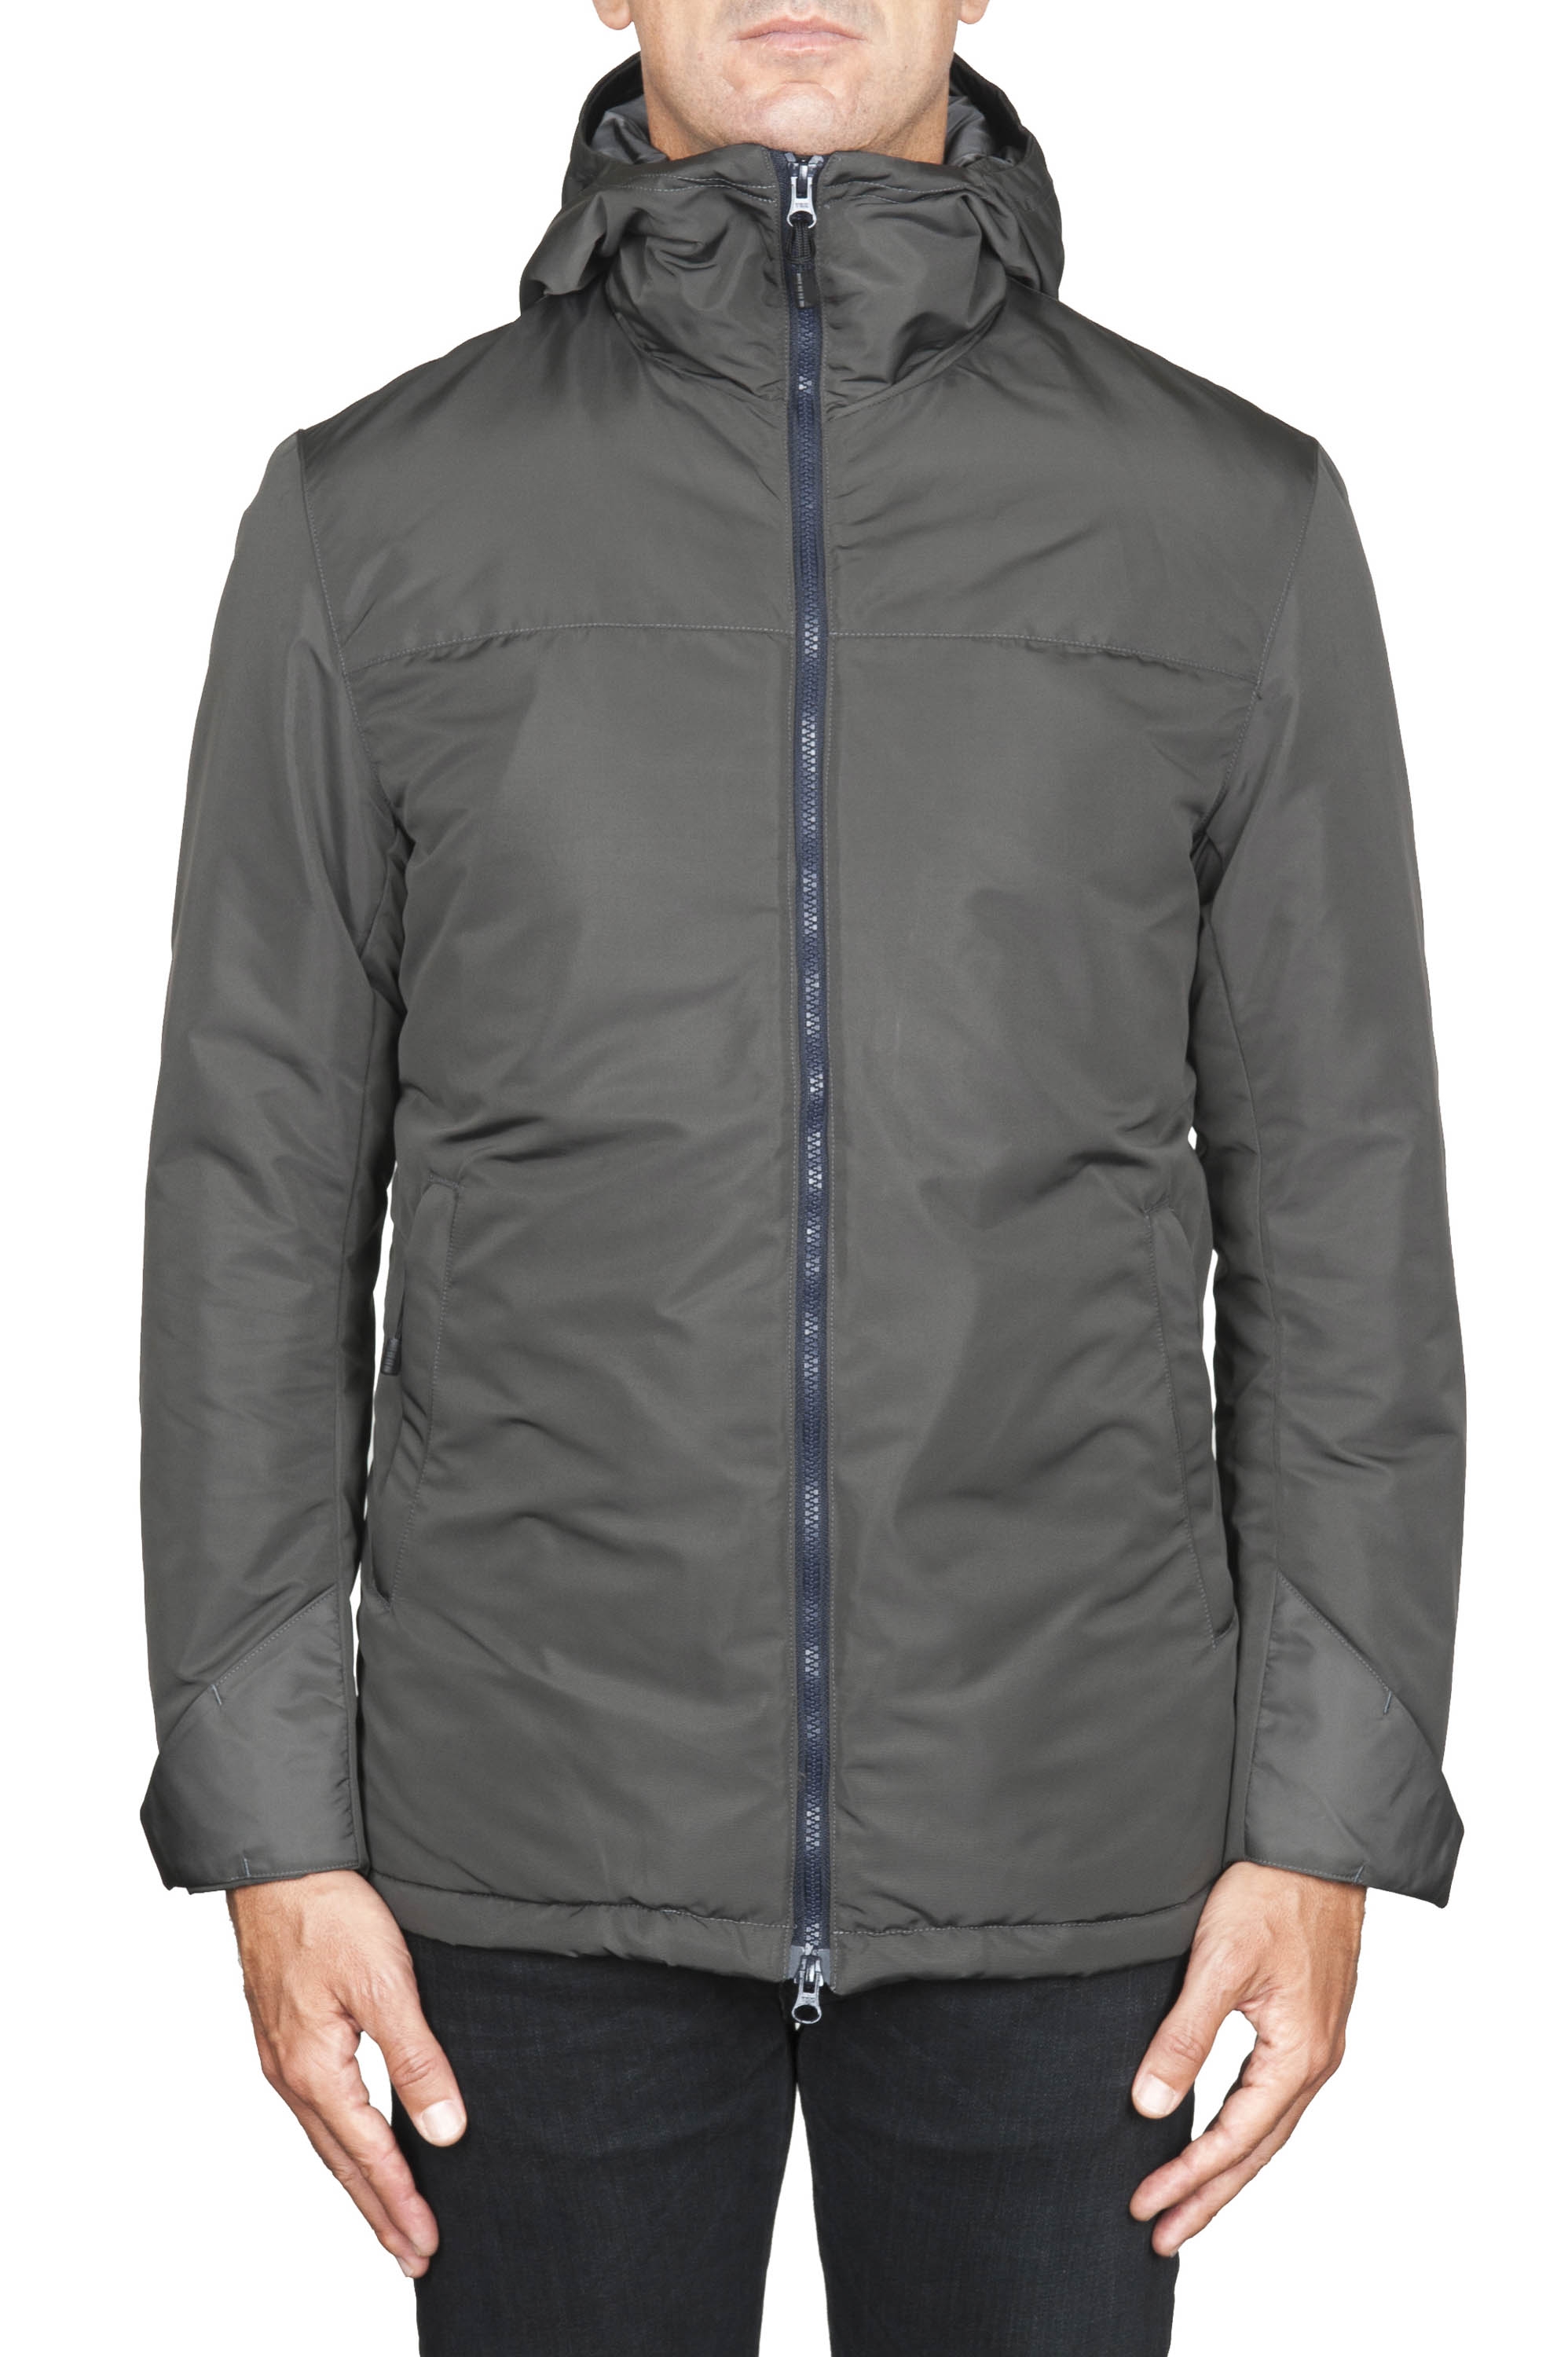 SBU 01556 Technical waterproof padded short parka jacket grey 01